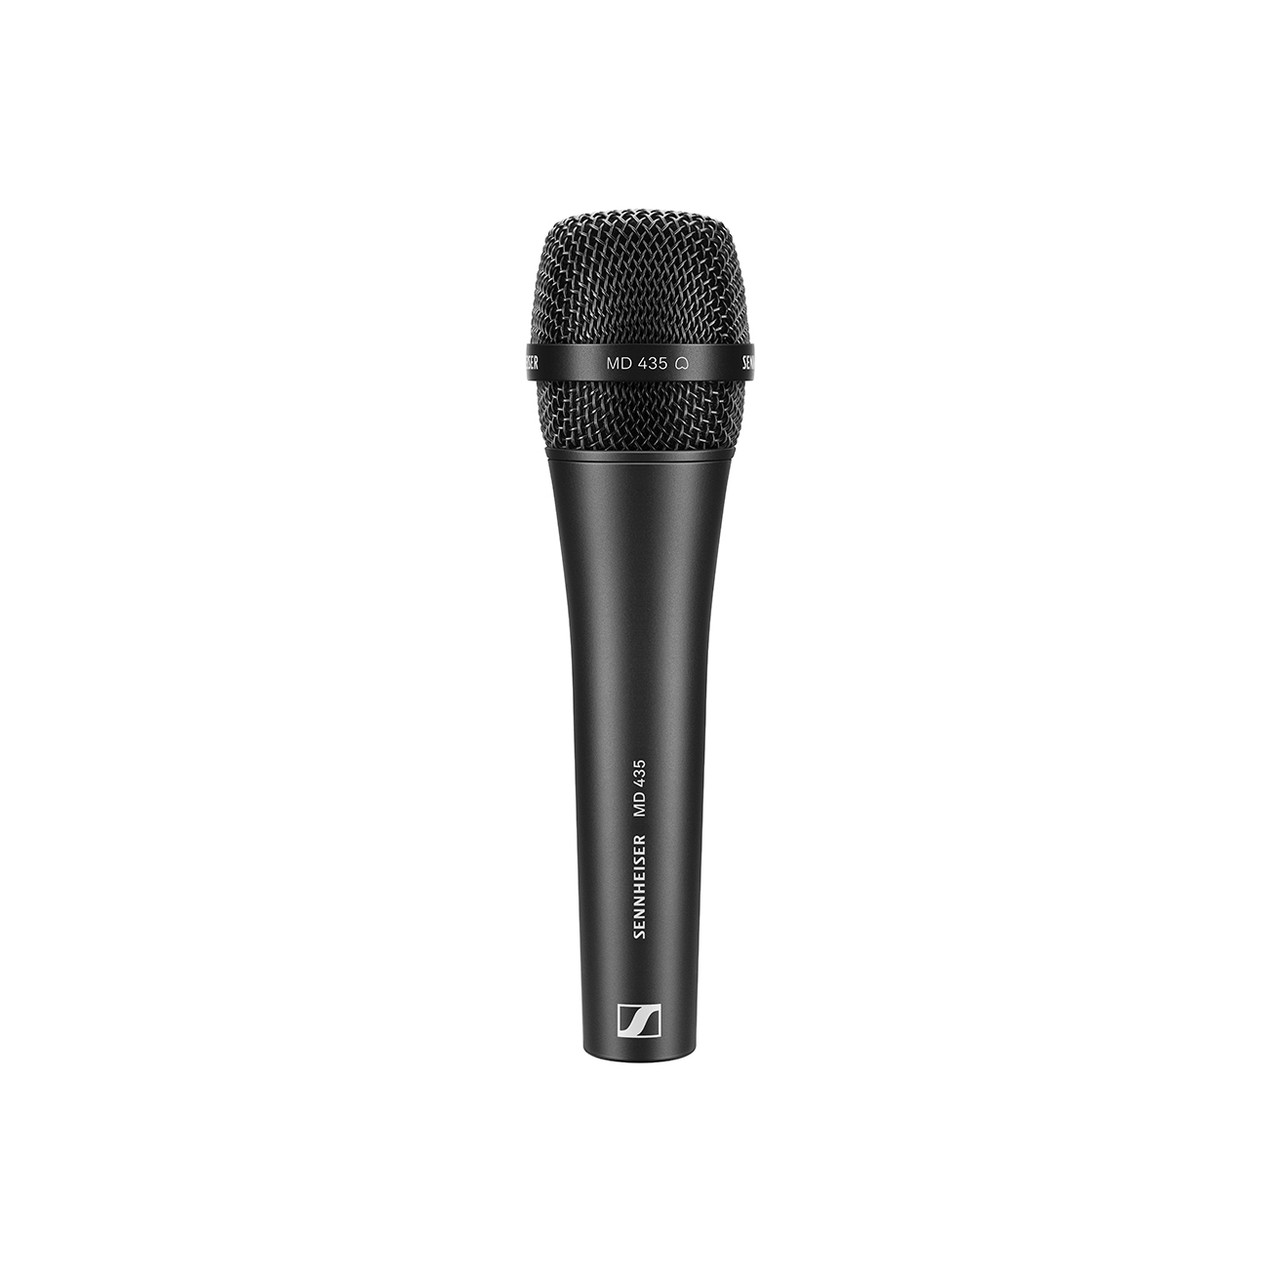 Sennheiser MD435 Dynamic Cardioid Vocal Handheld Microphone